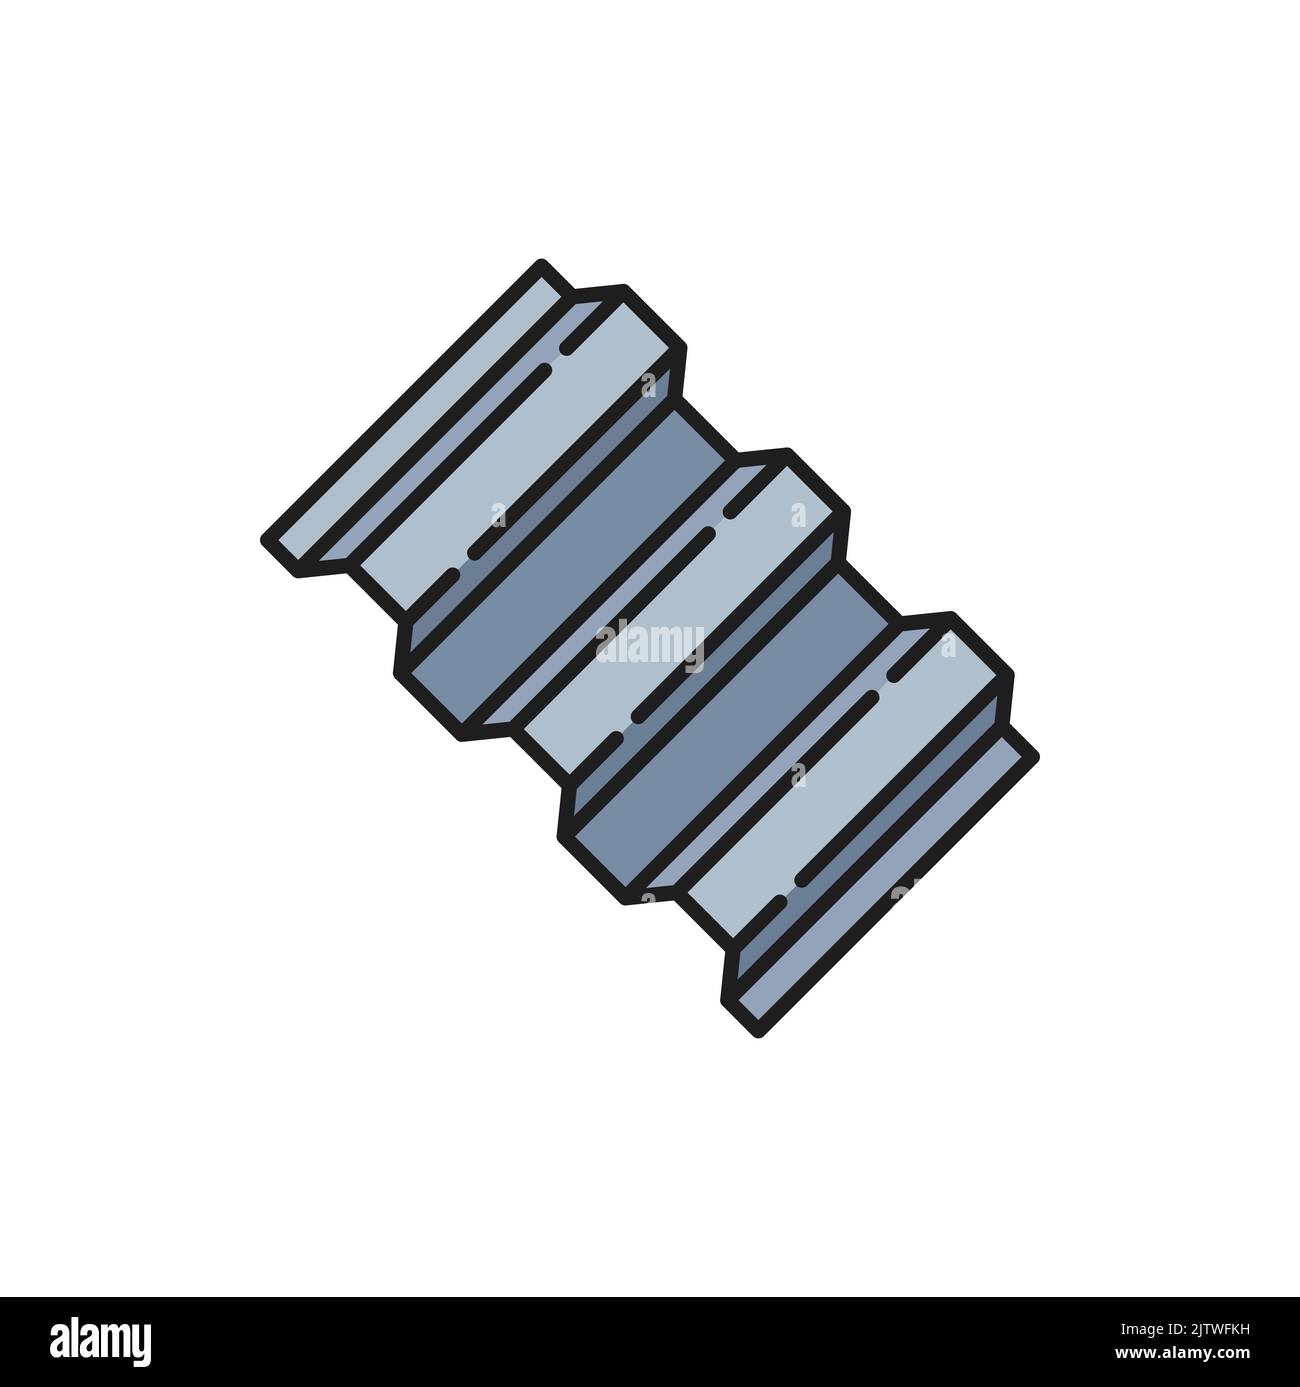 Corrugated sheets of metal stock illustration. Illustration of roofing -  30512657